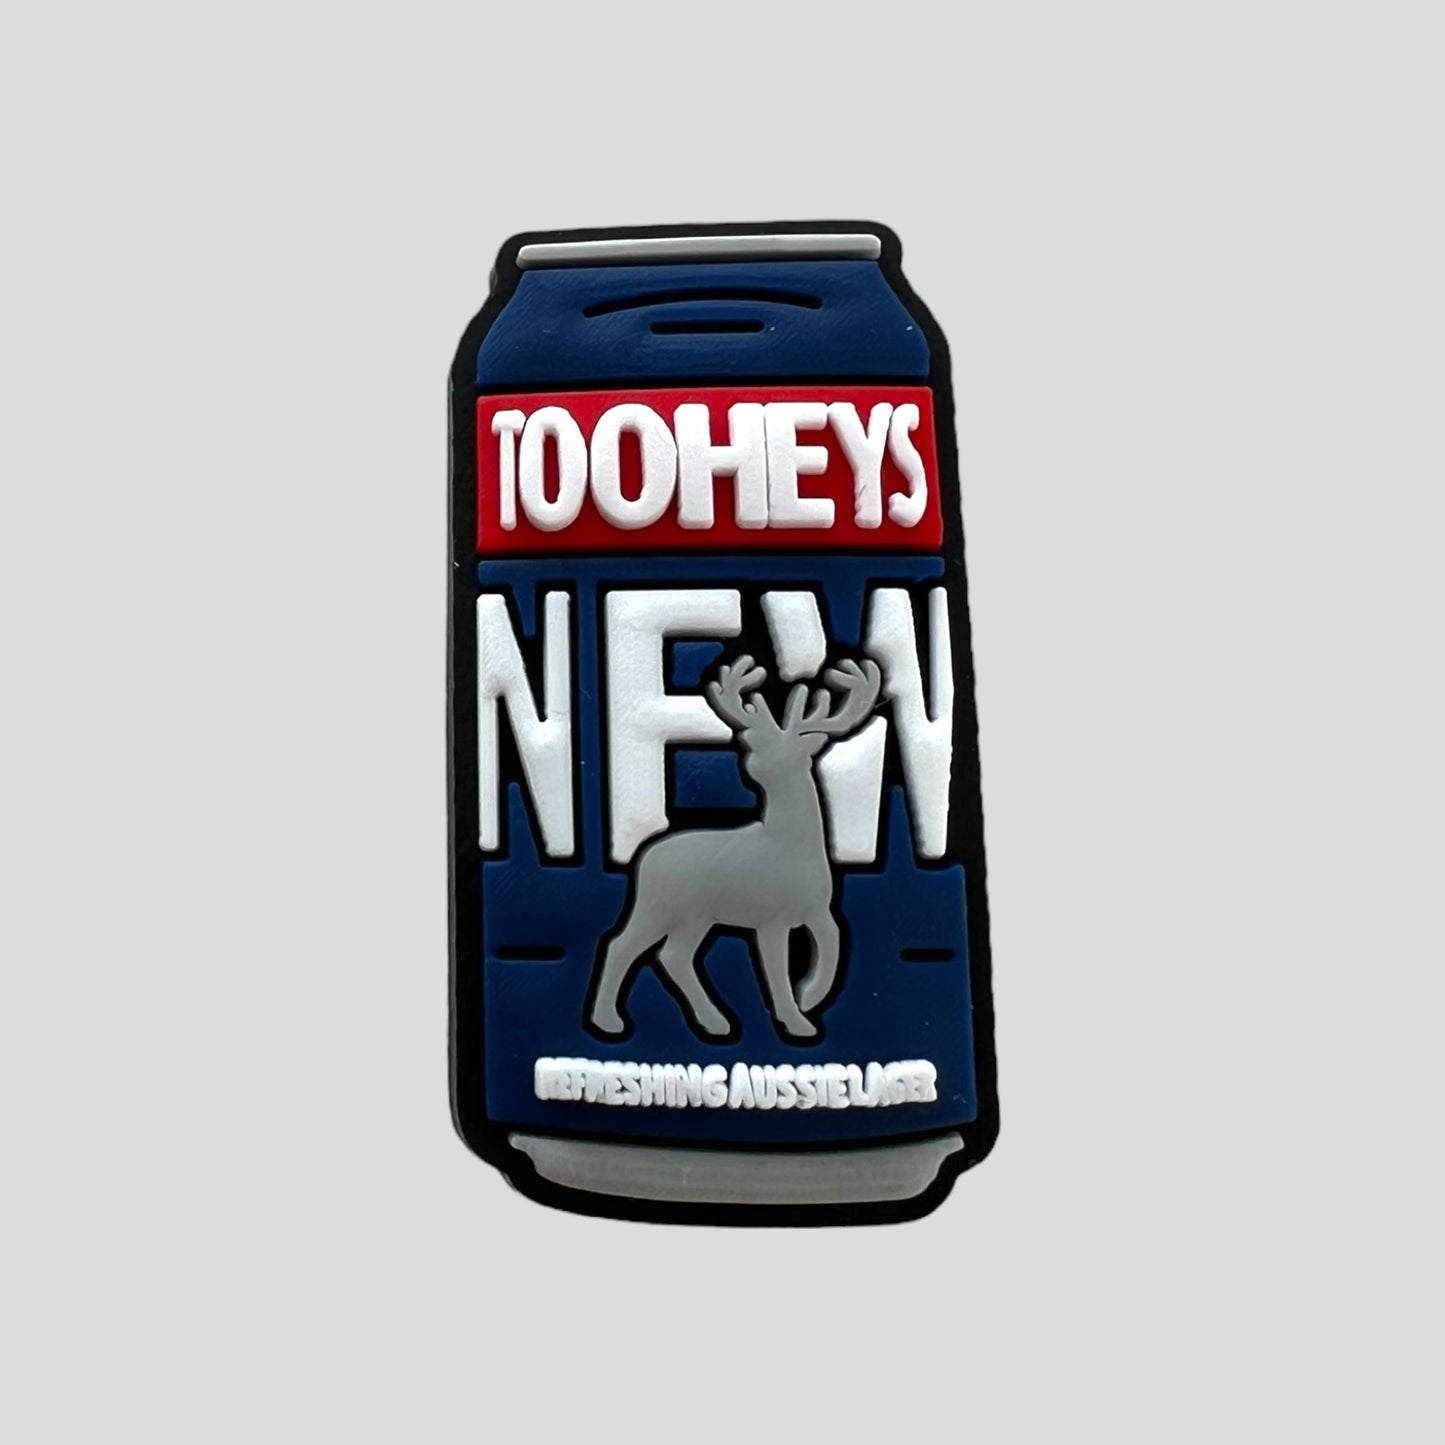 Tooheys New Can | Australia